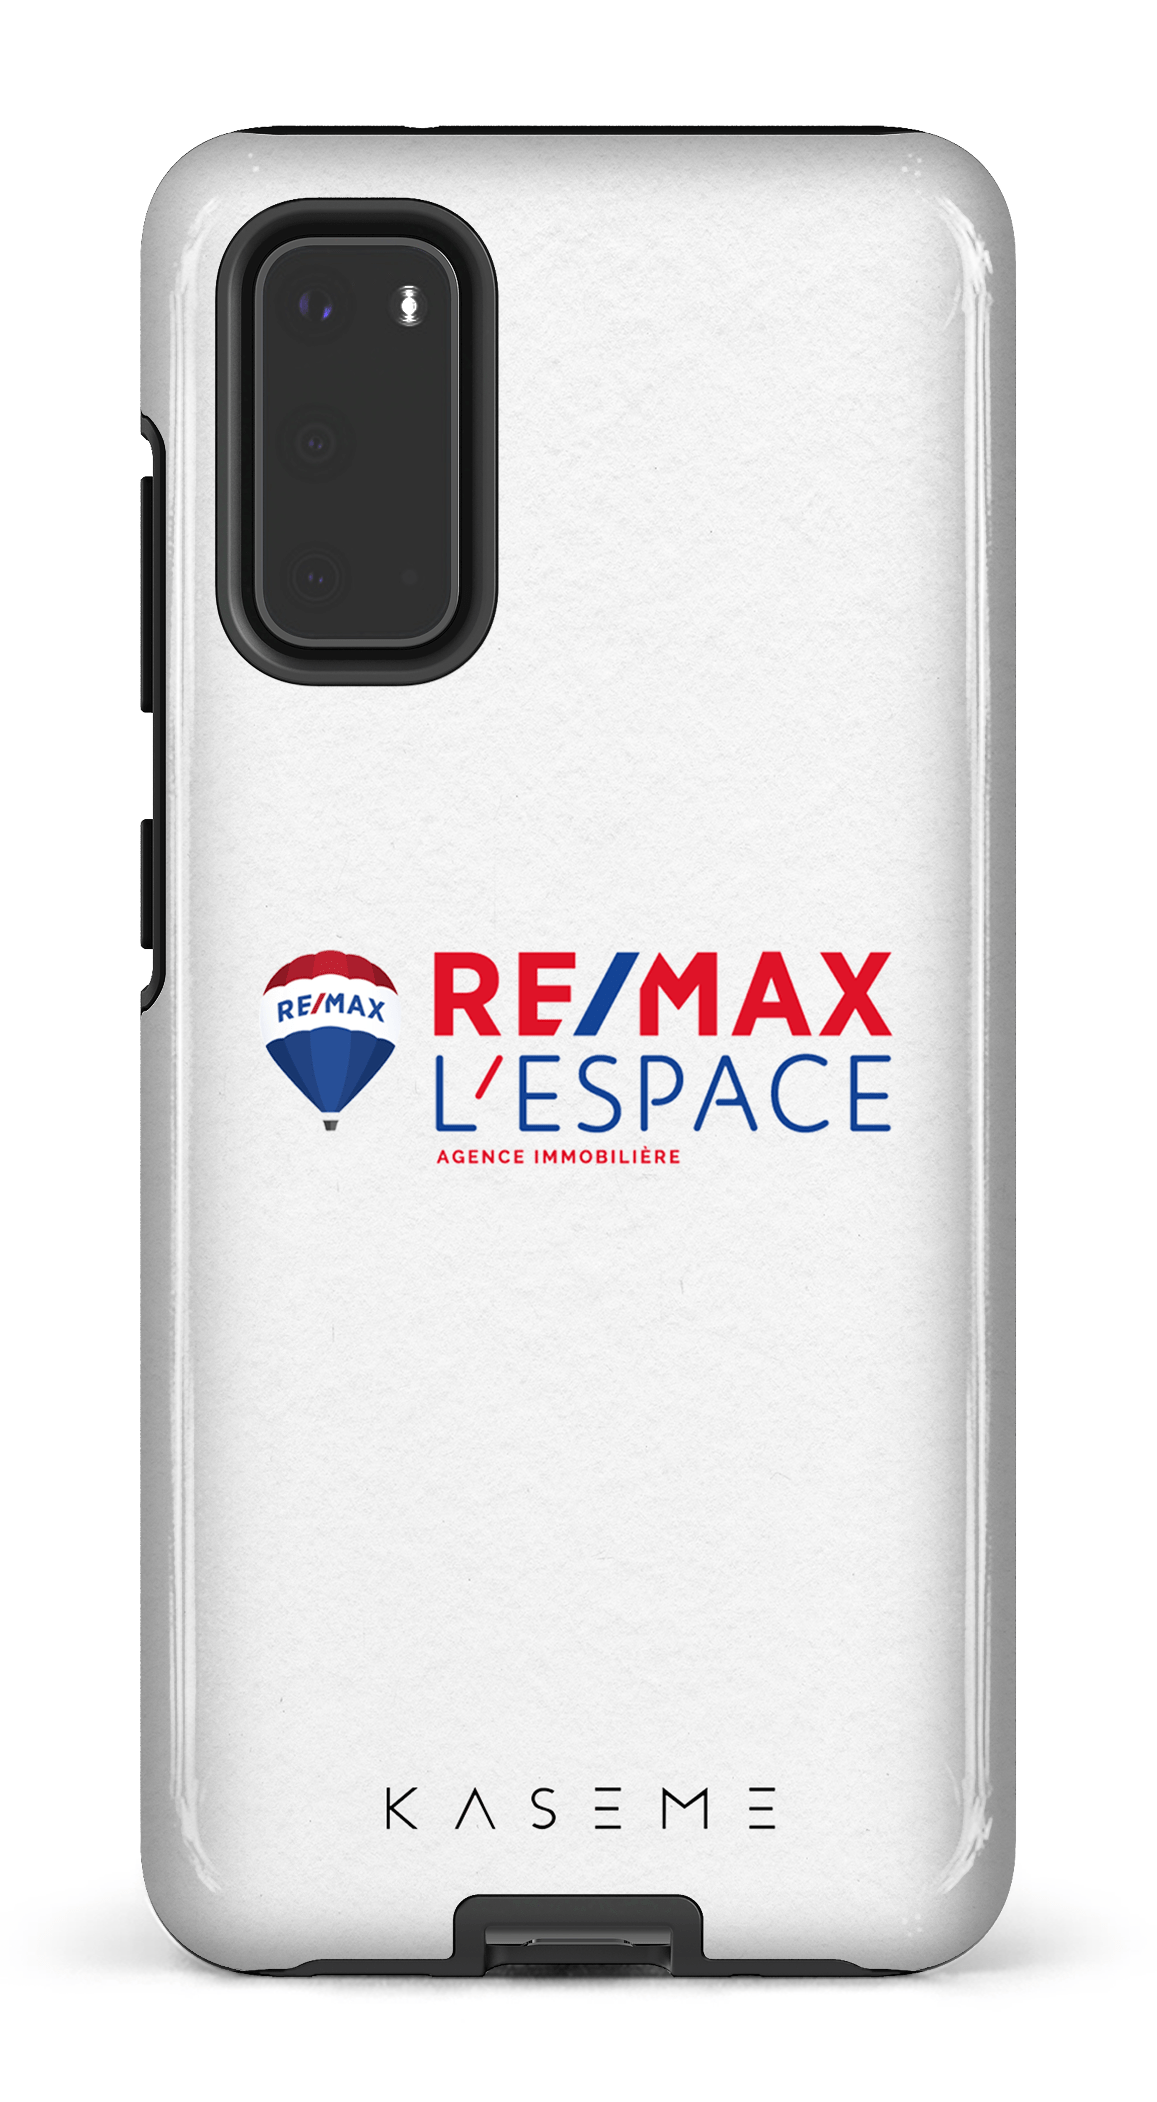 Remax L'Espace Blanc - Galaxy S20